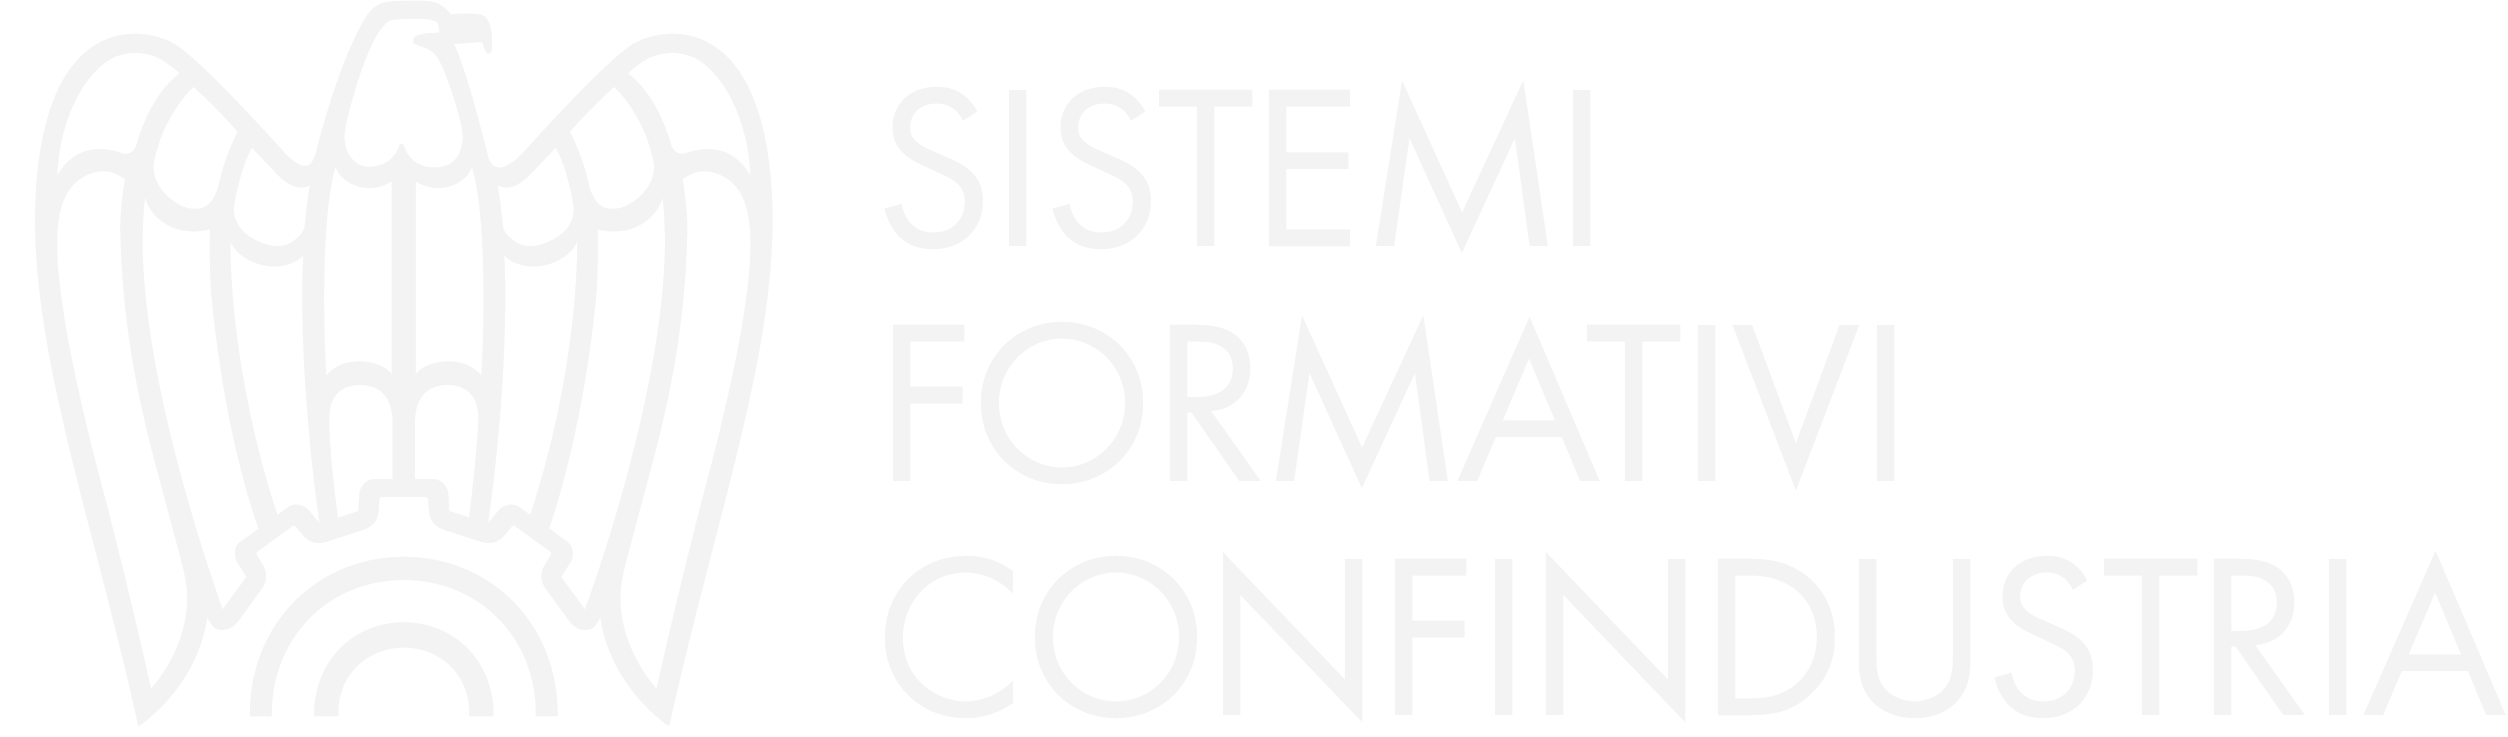 Sistemi Formativi Confindustria